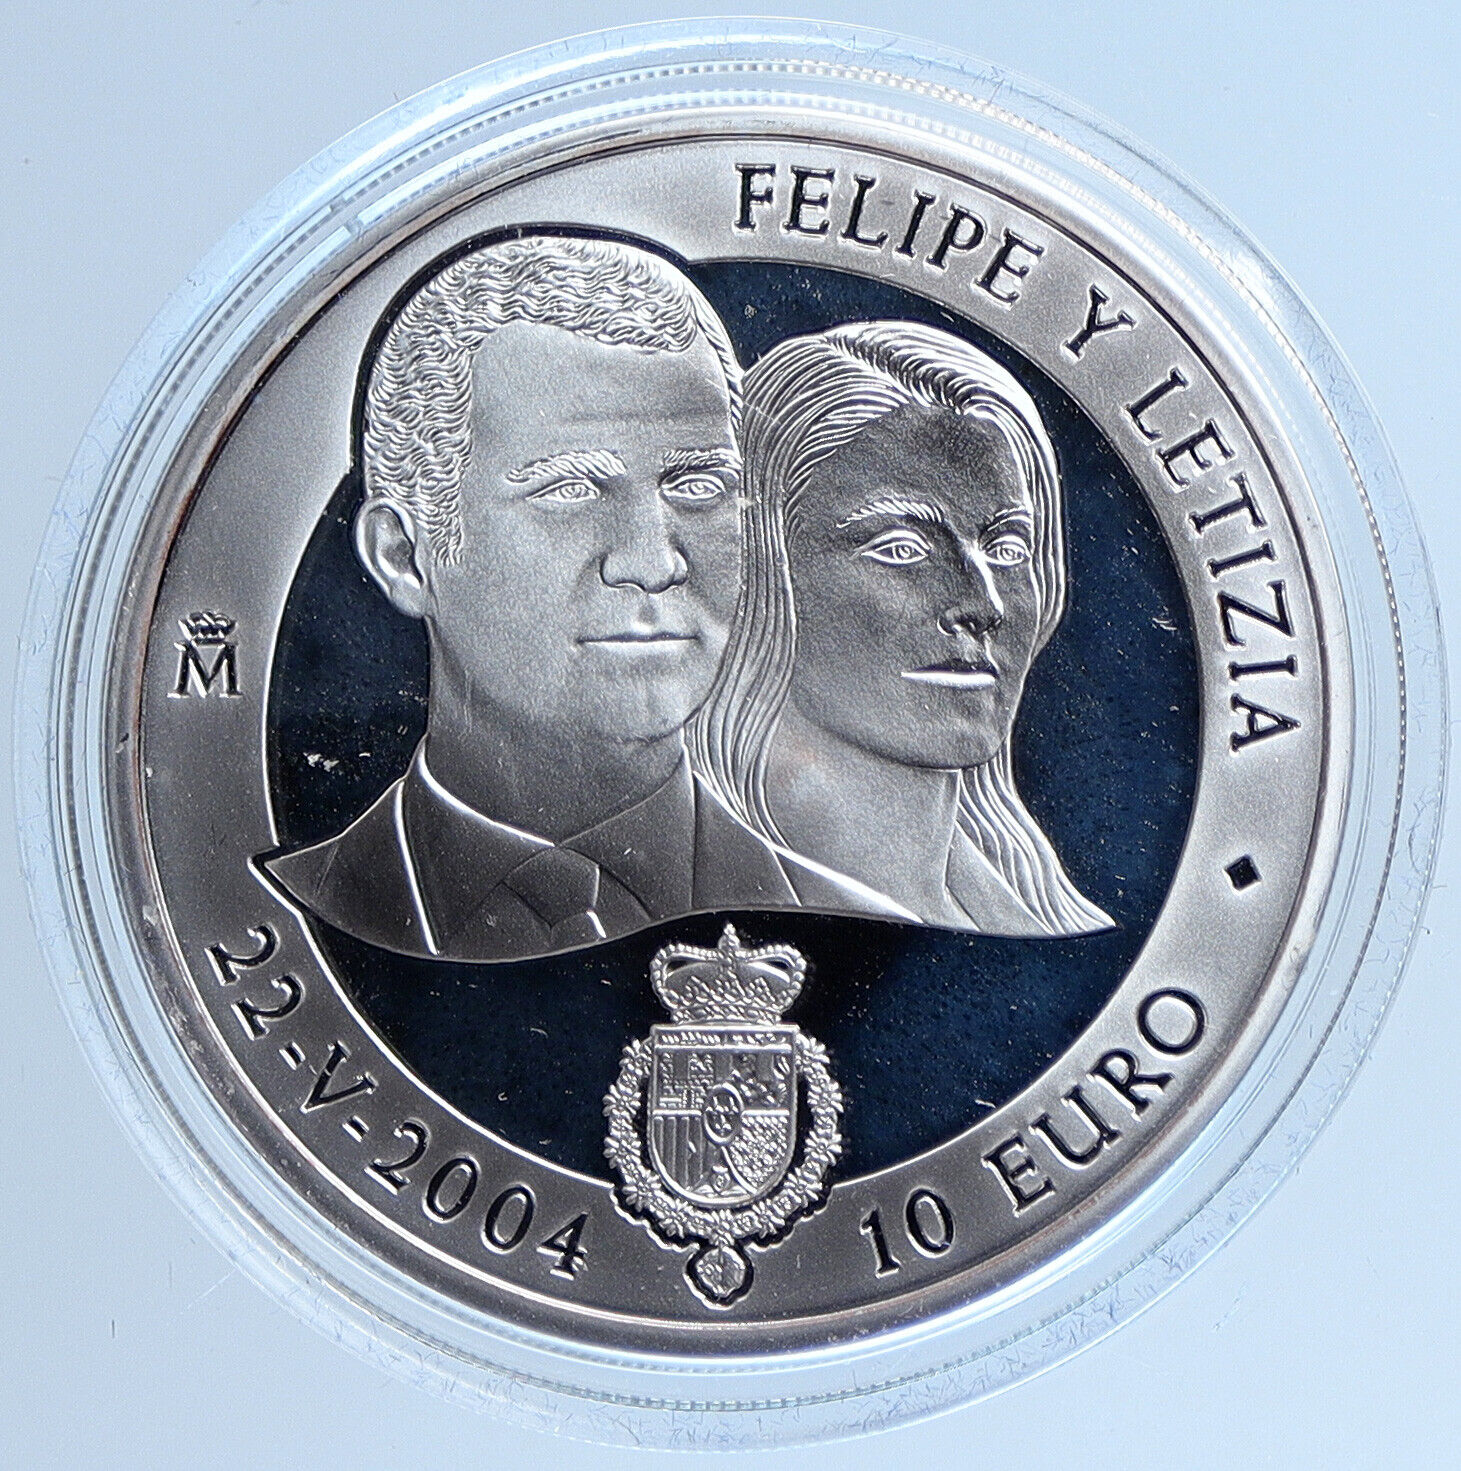 2004 SPAIN JUAN CARLOS I Prince Felipe Letizia Proof Silver 10 Euro Coin i113533